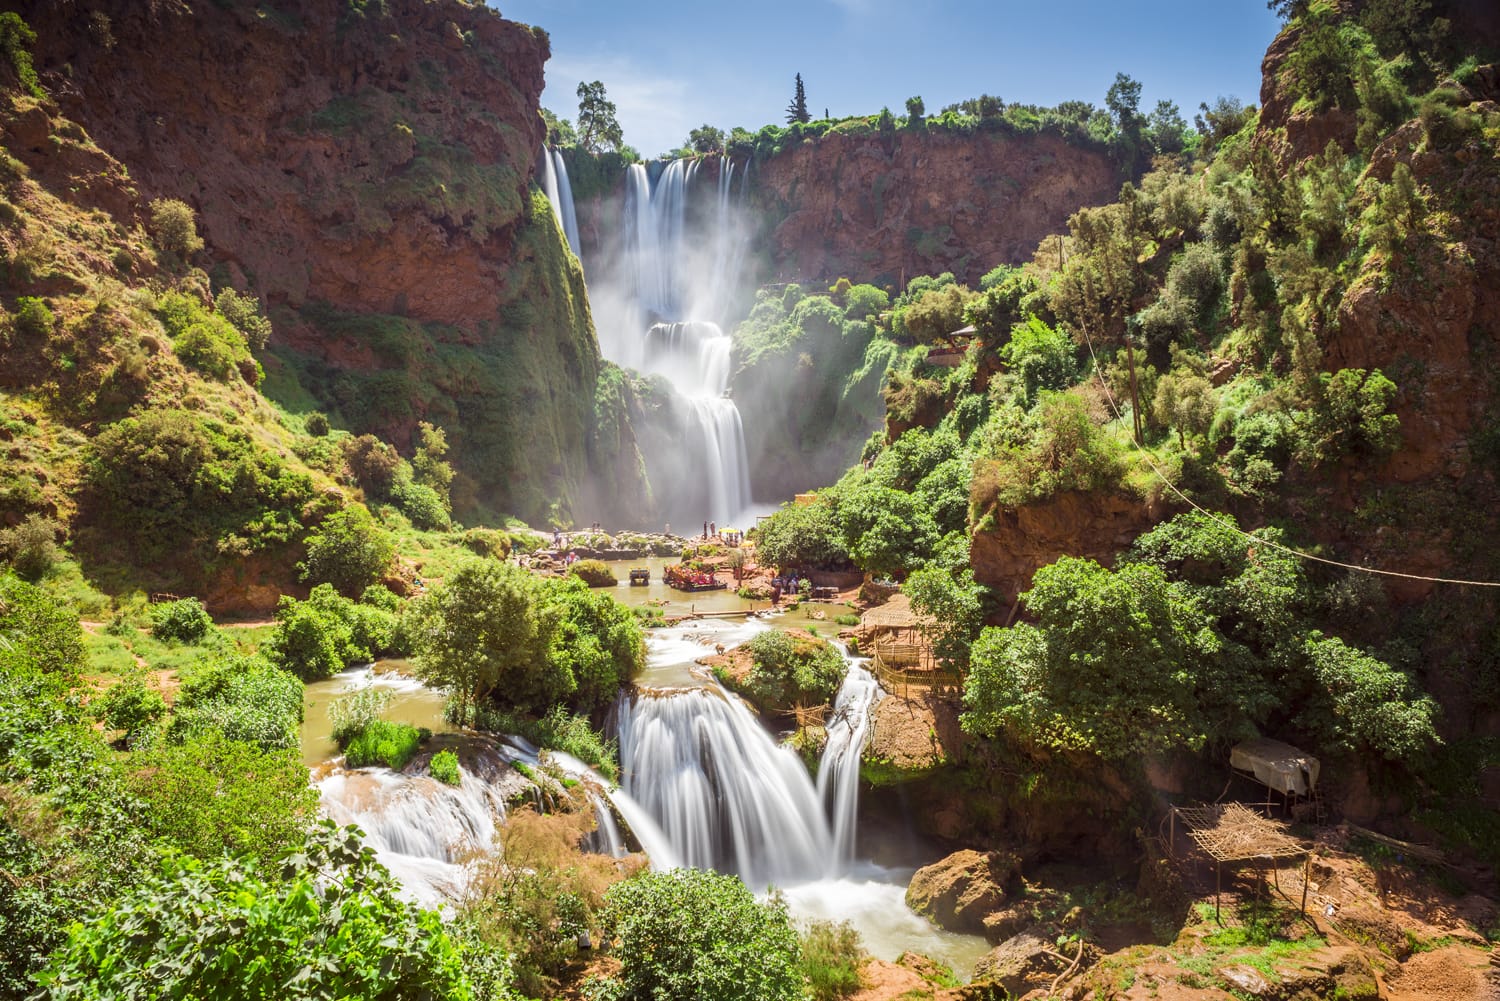 Ouzoud waterfalls, Grand Atlas in Morocco